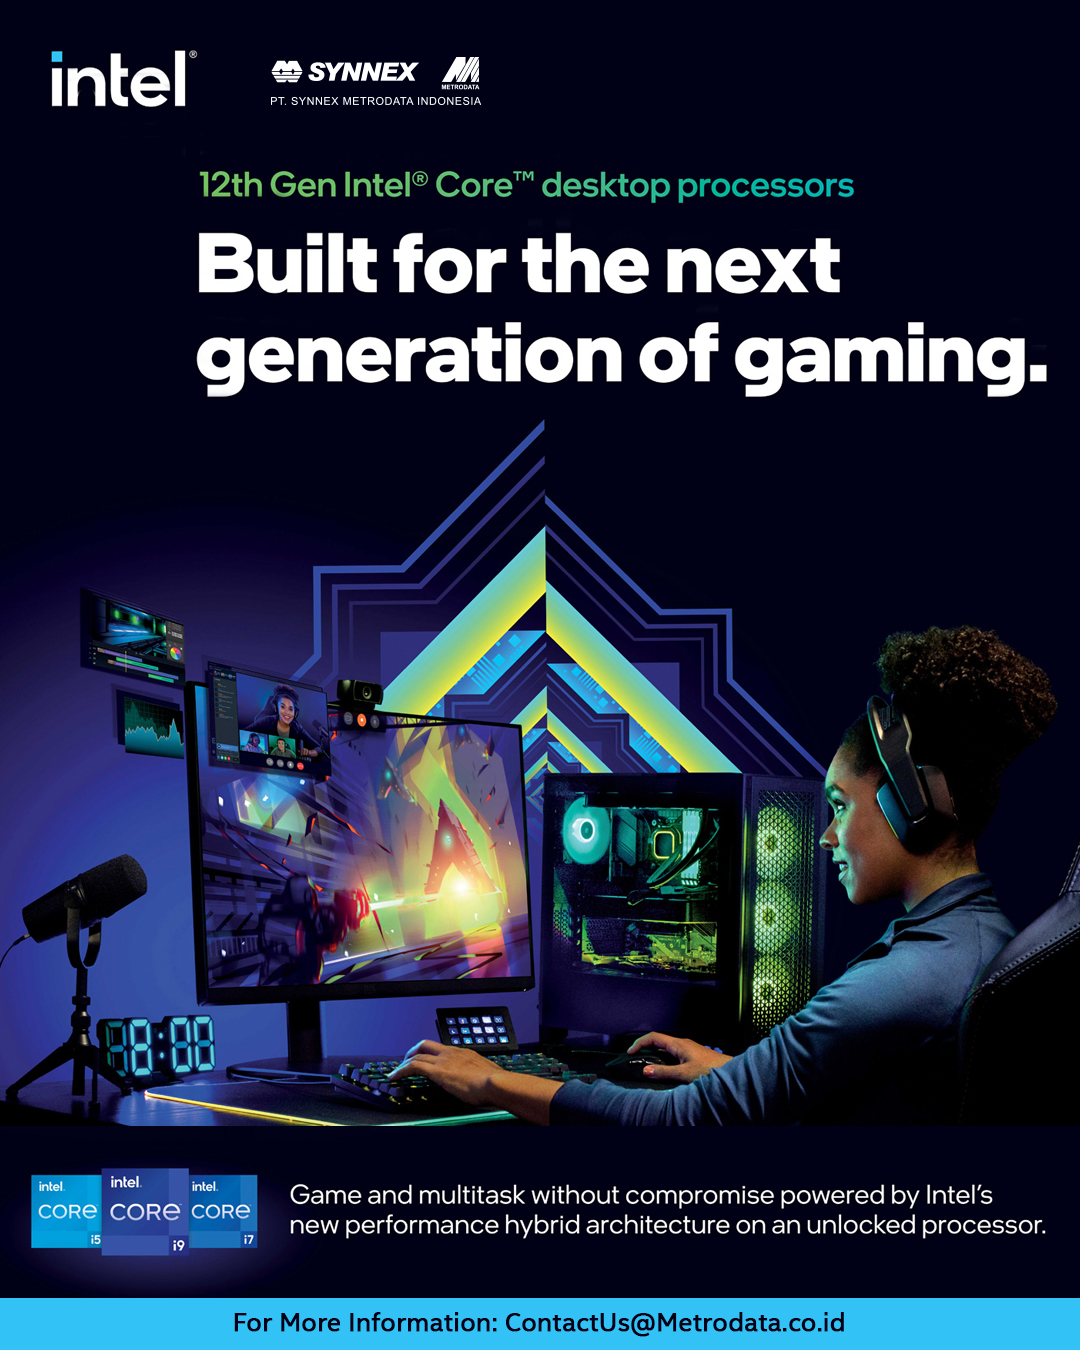 12th Gen Intel Core Desktop Processors : Built for the next generation of gaming